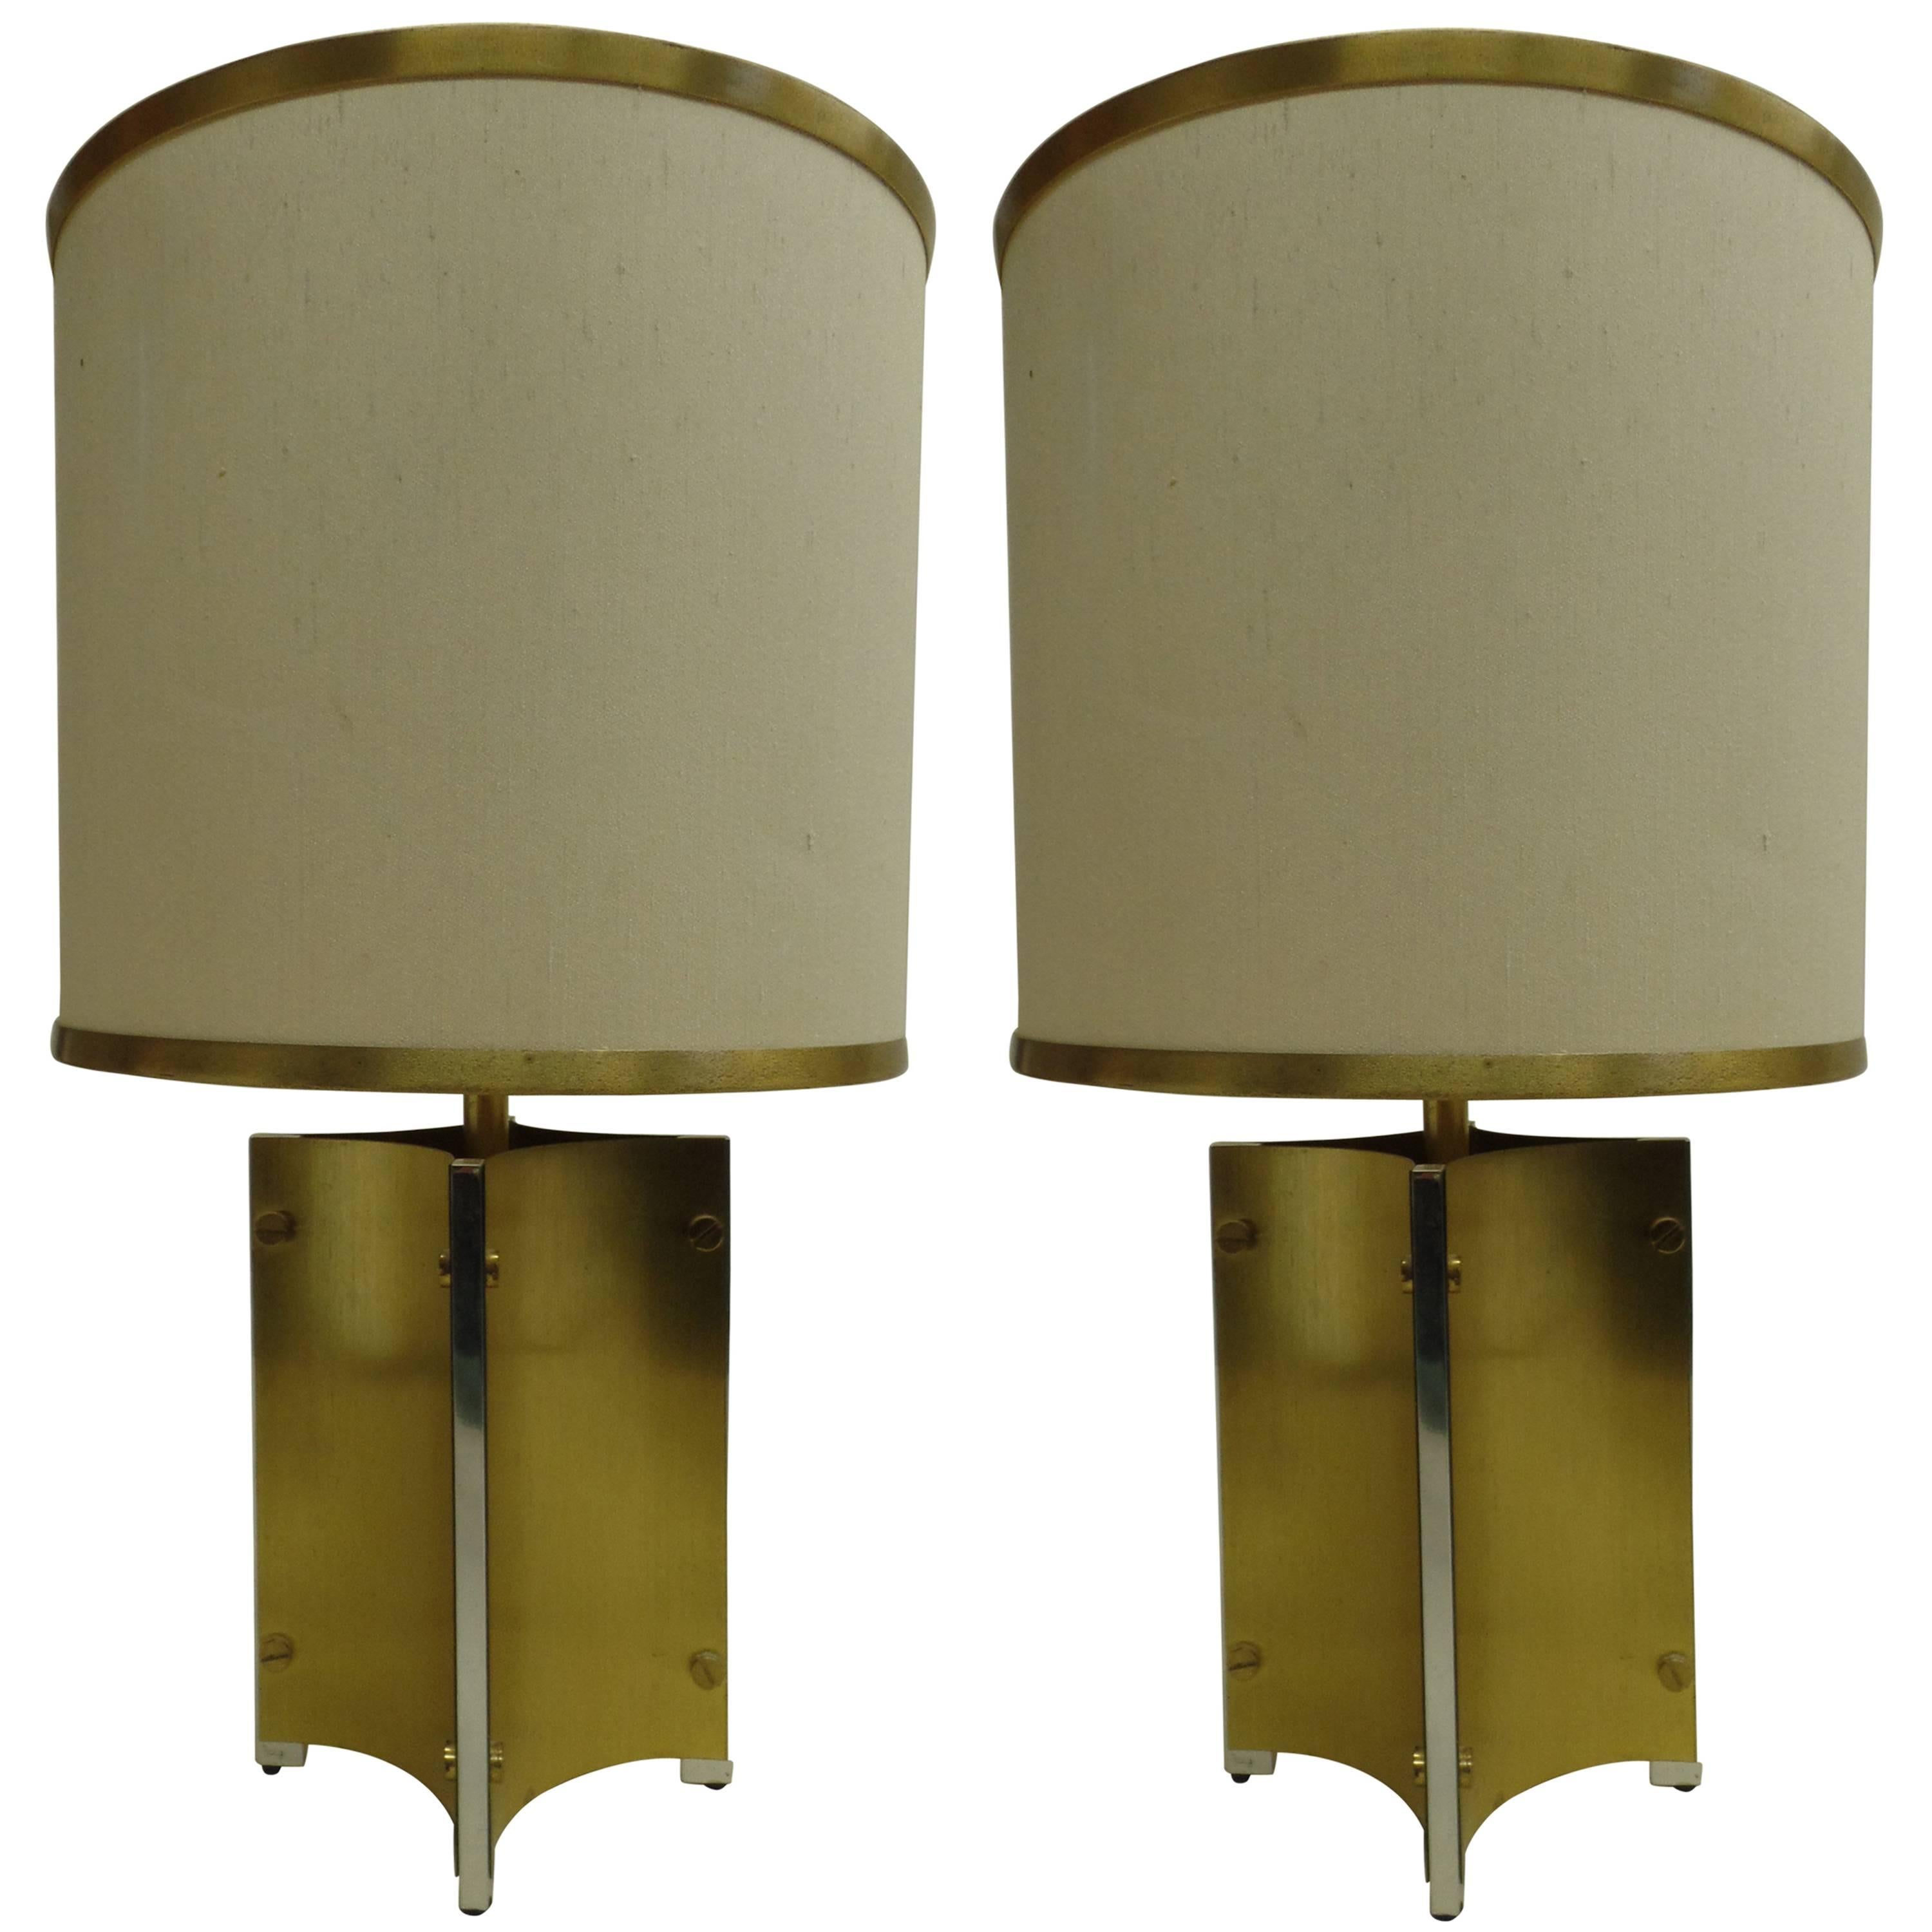 Pair of Italian Midcentury Modern Brass & Steel Table Lamps Attr. to Romeo Rega